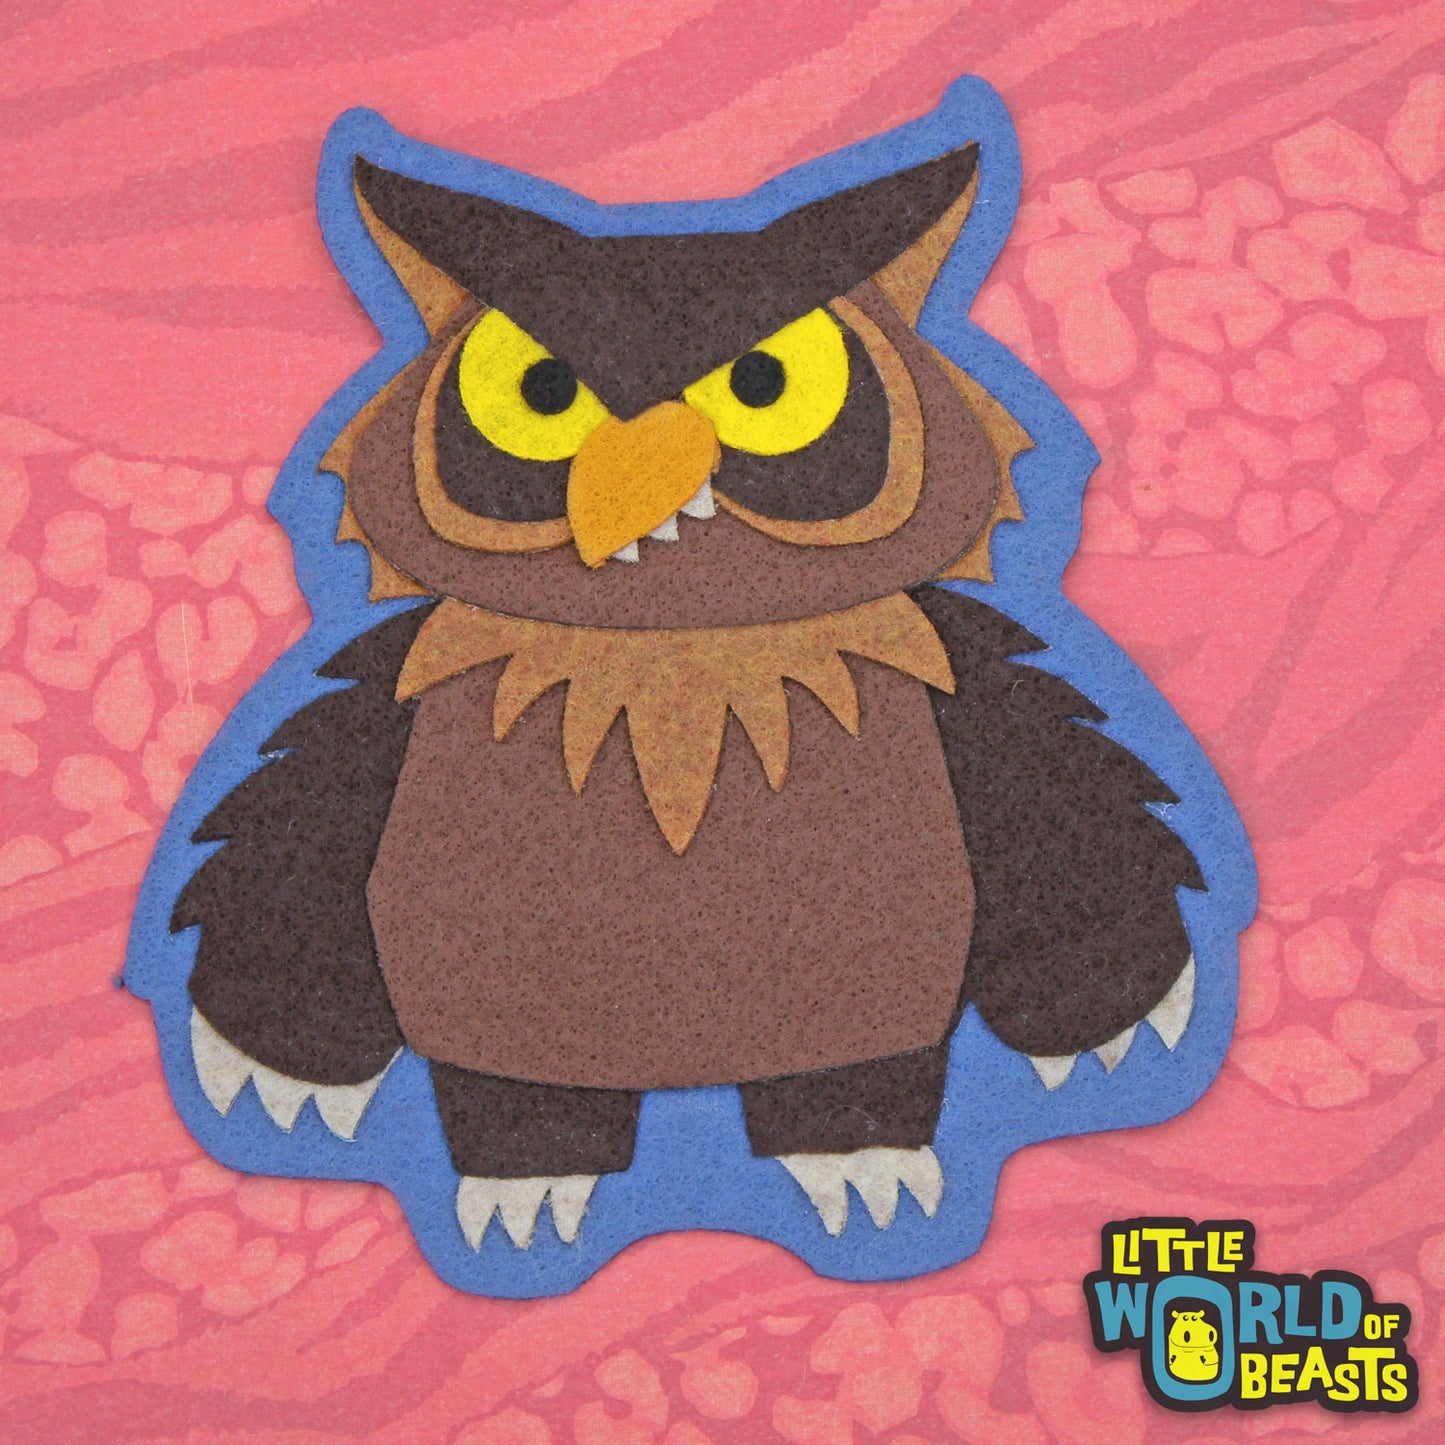 Sebastian the Owlbear -Sew On or Iron On Patch - Little World of Beasts